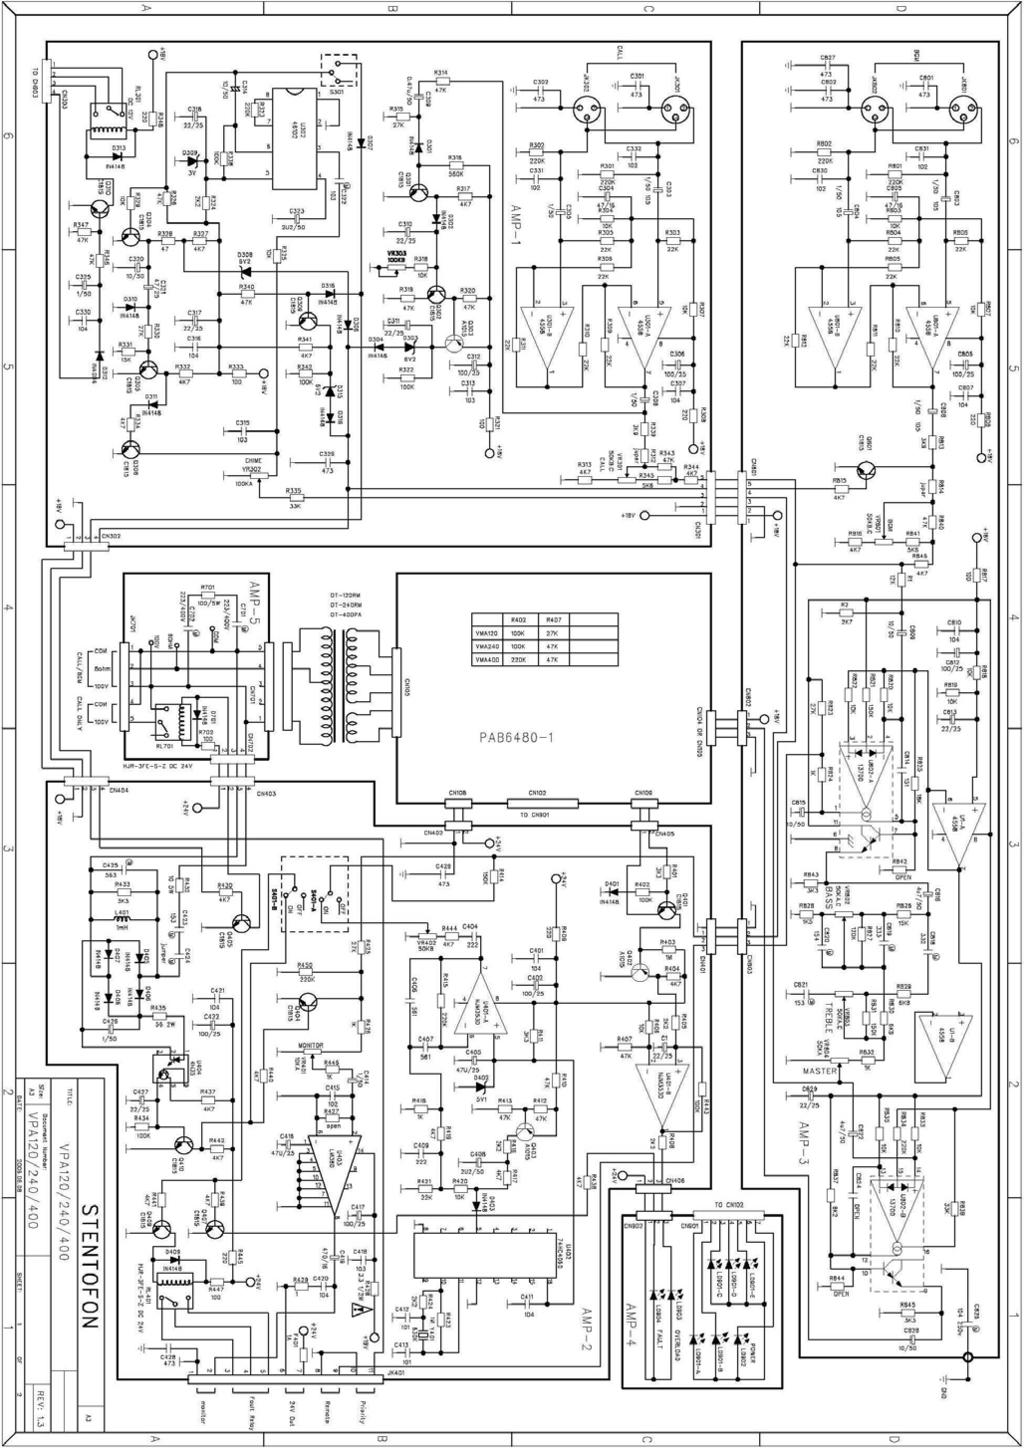 6.2 Schematic diagram, Amplifier Page